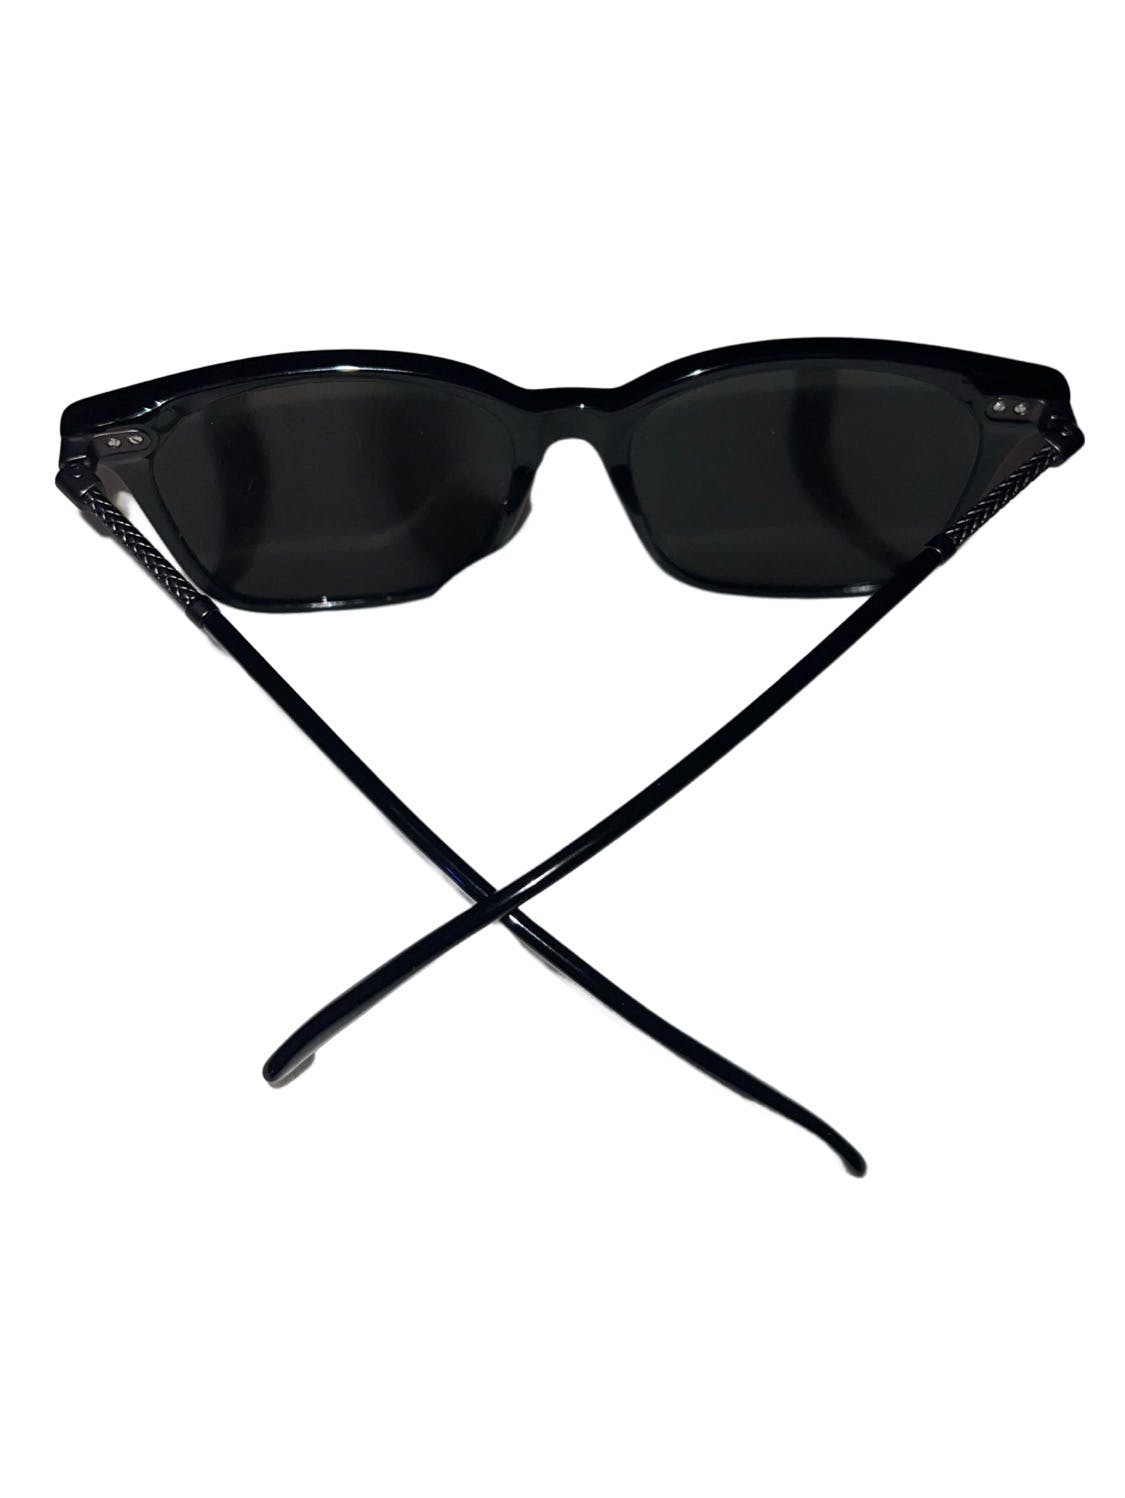 Thin frame sunglasses - 5